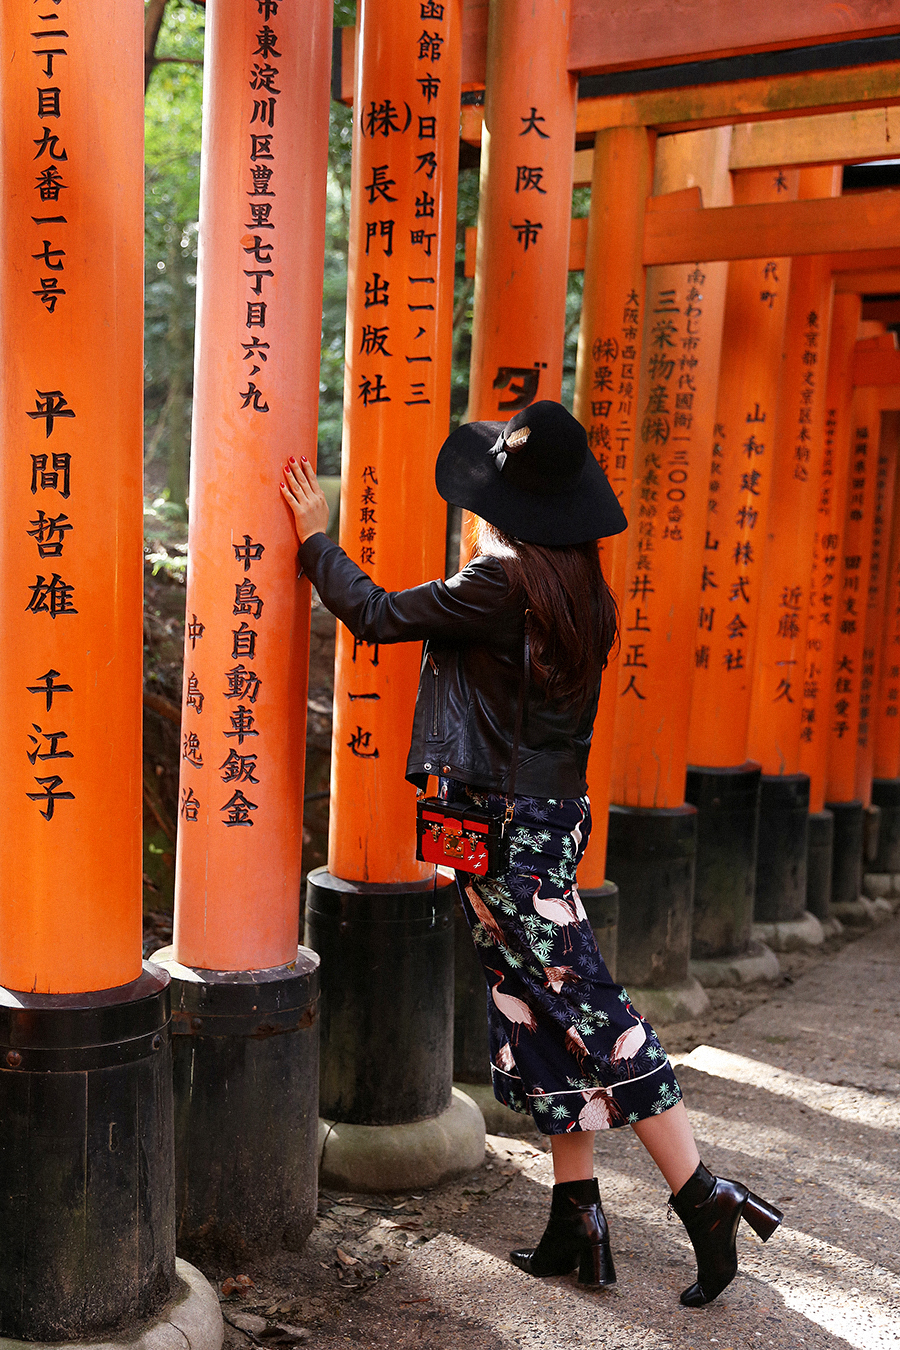 Kyoto, Japan: Fushimi Inari Taisha